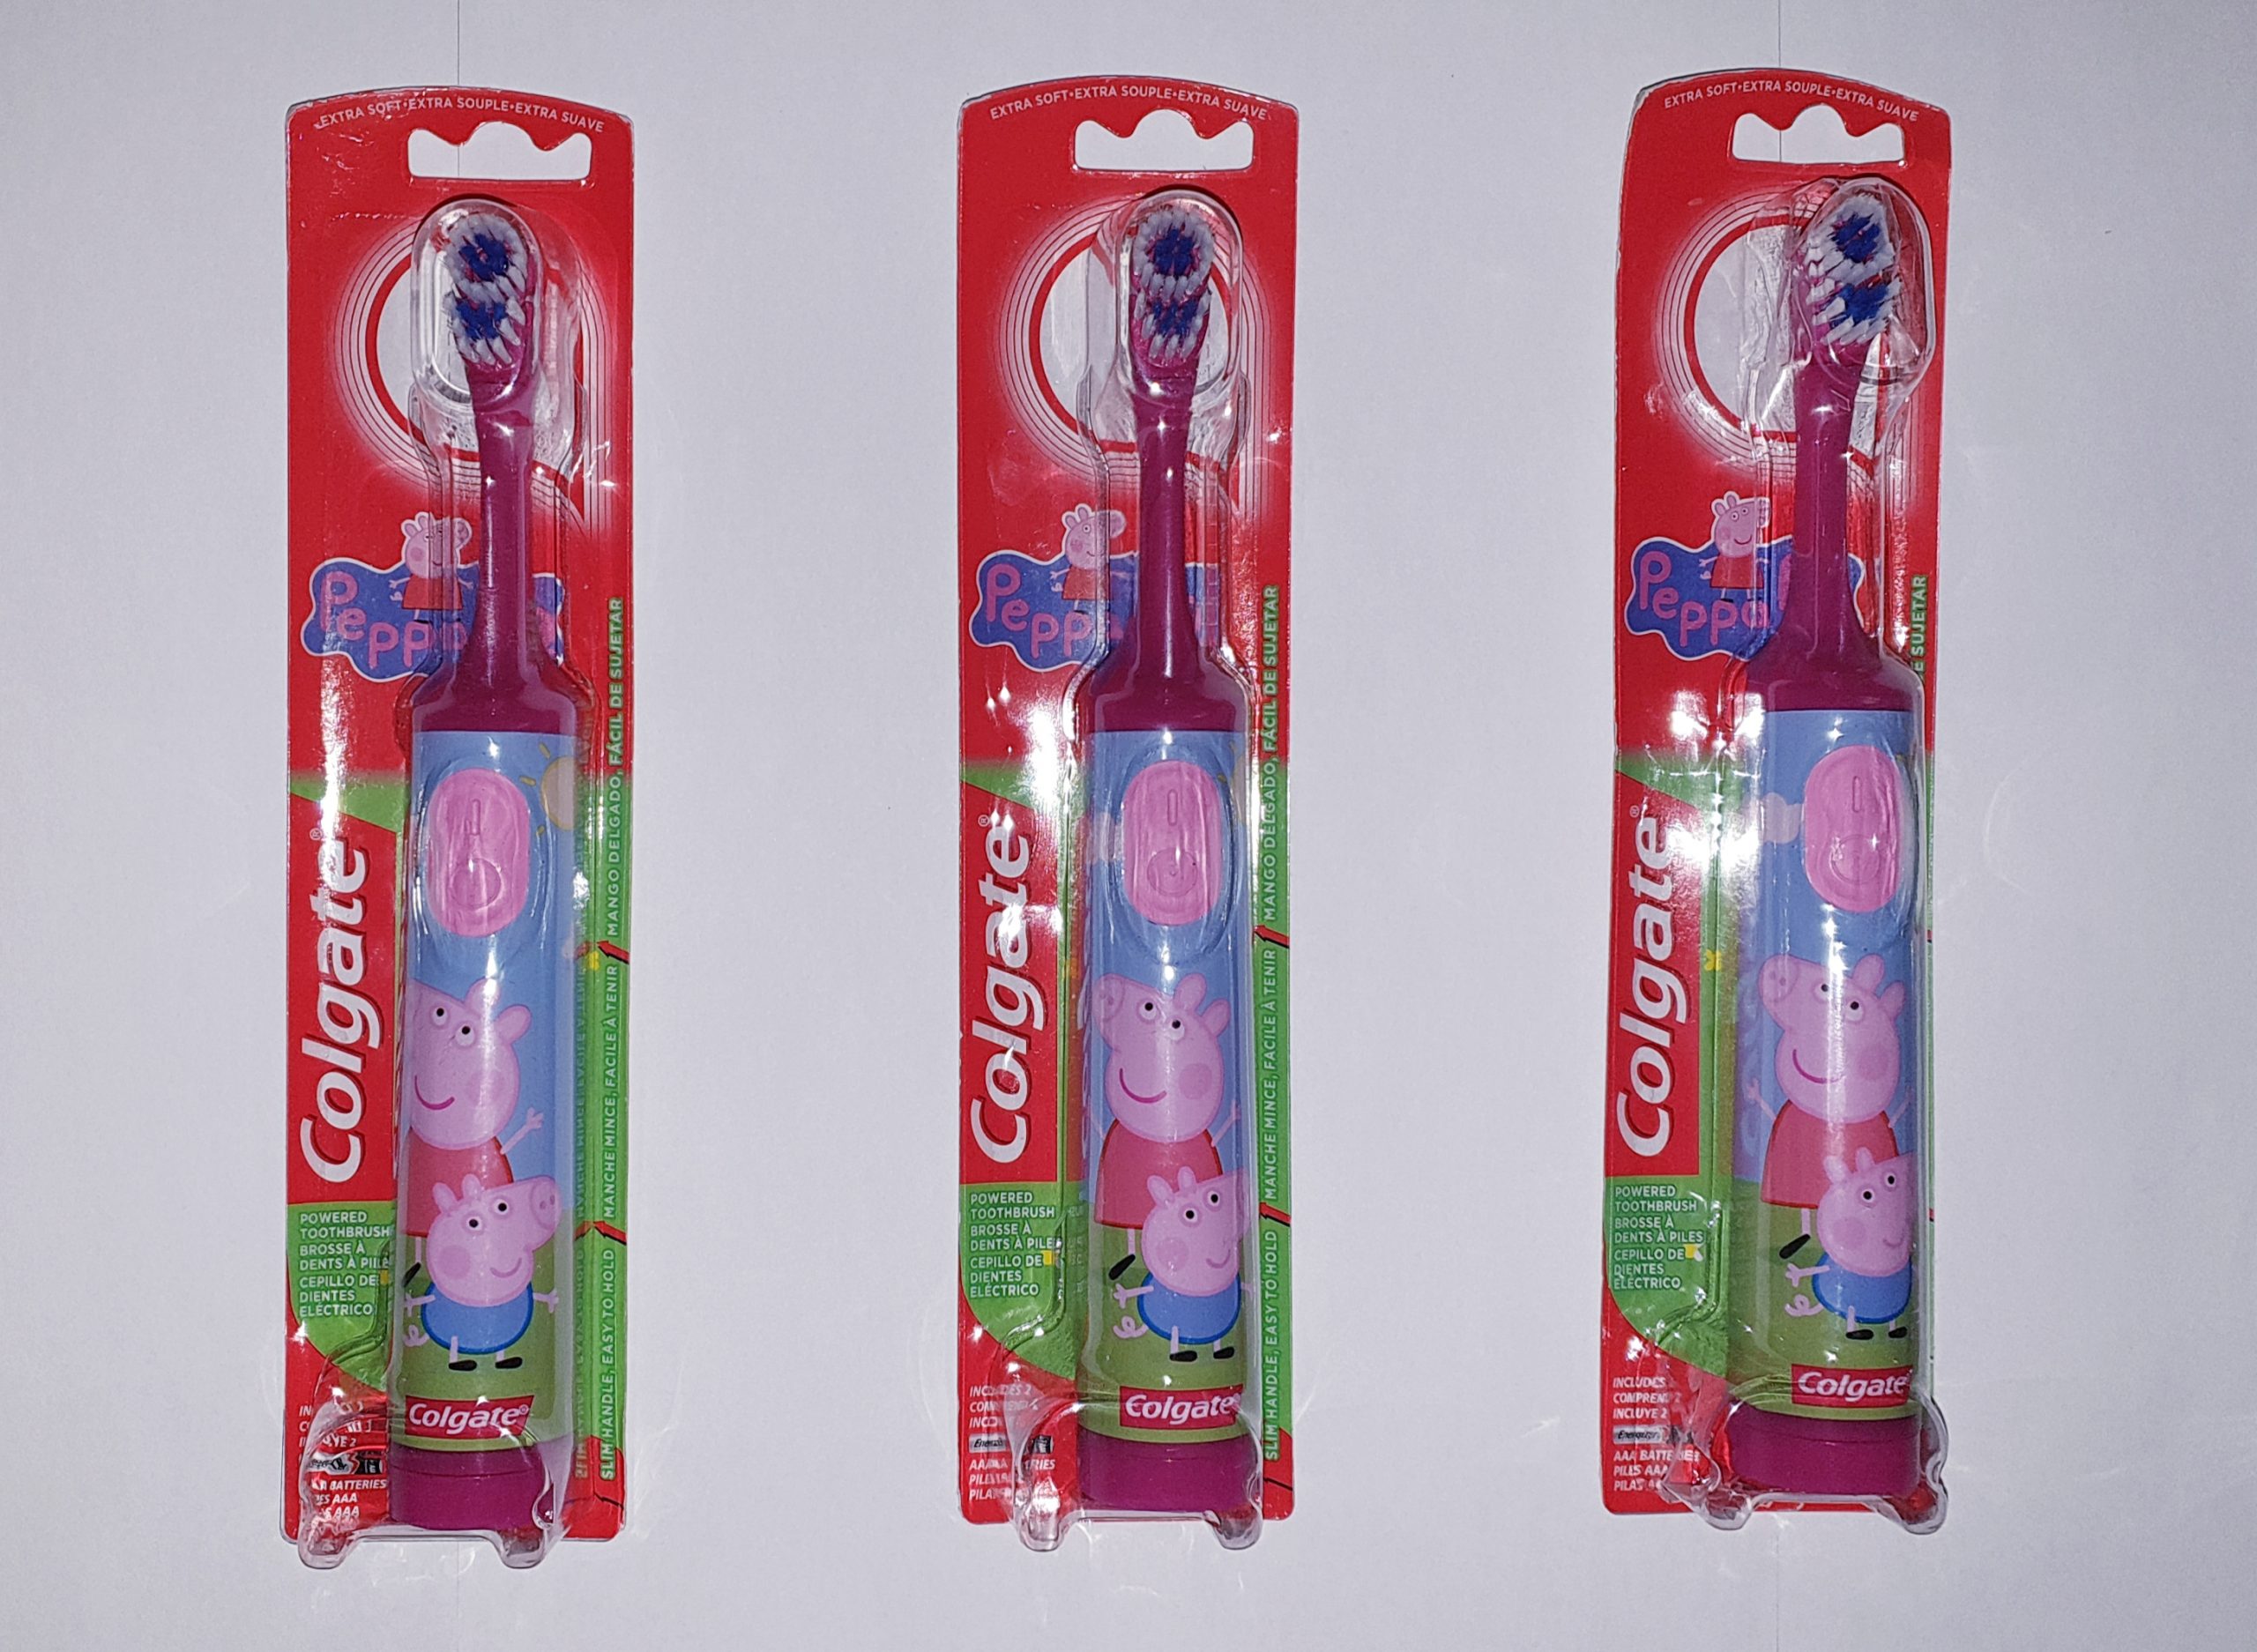 Peppa Pig Electric Toothbrush – Colgate